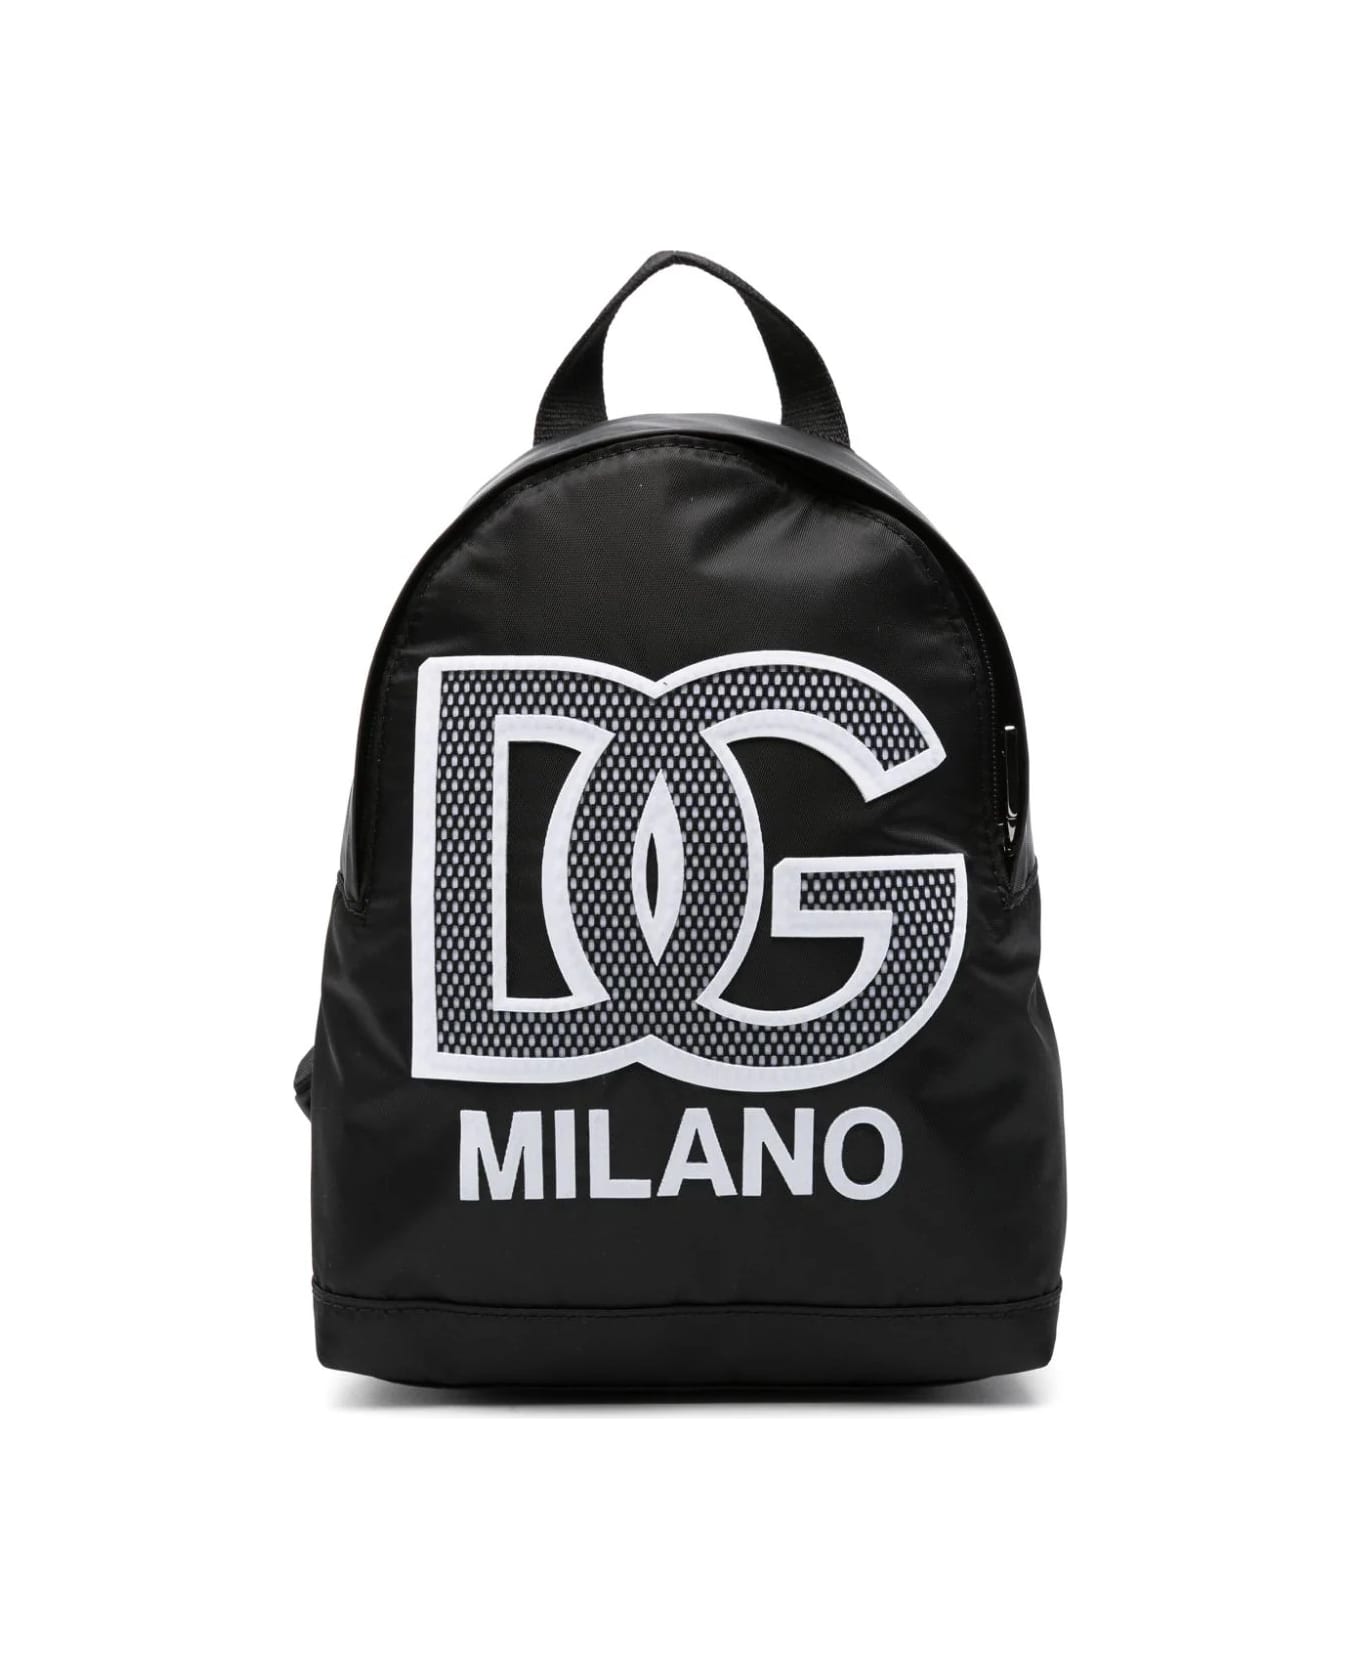 Dolce & Gabbana Black Nylon Backpack With Dg Logo - Nero